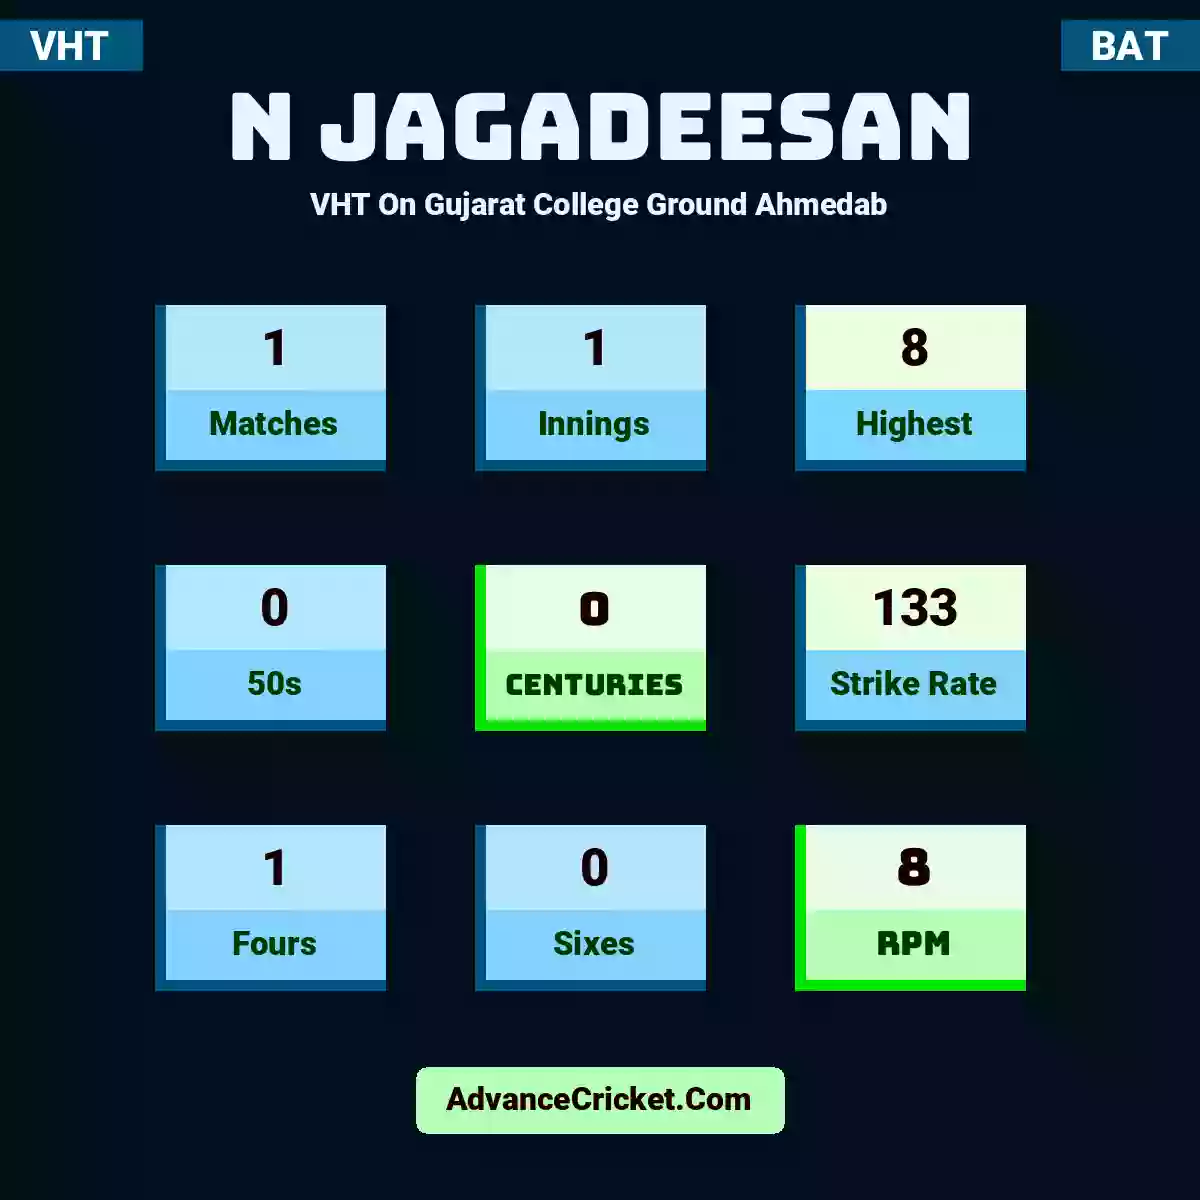 N Jagadeesan VHT  On Gujarat College Ground Ahmedab, N Jagadeesan played 1 matches, scored 8 runs as highest, 0 half-centuries, and 0 centuries, with a strike rate of 133. N.Jagadeesan hit 1 fours and 0 sixes, with an RPM of 8.